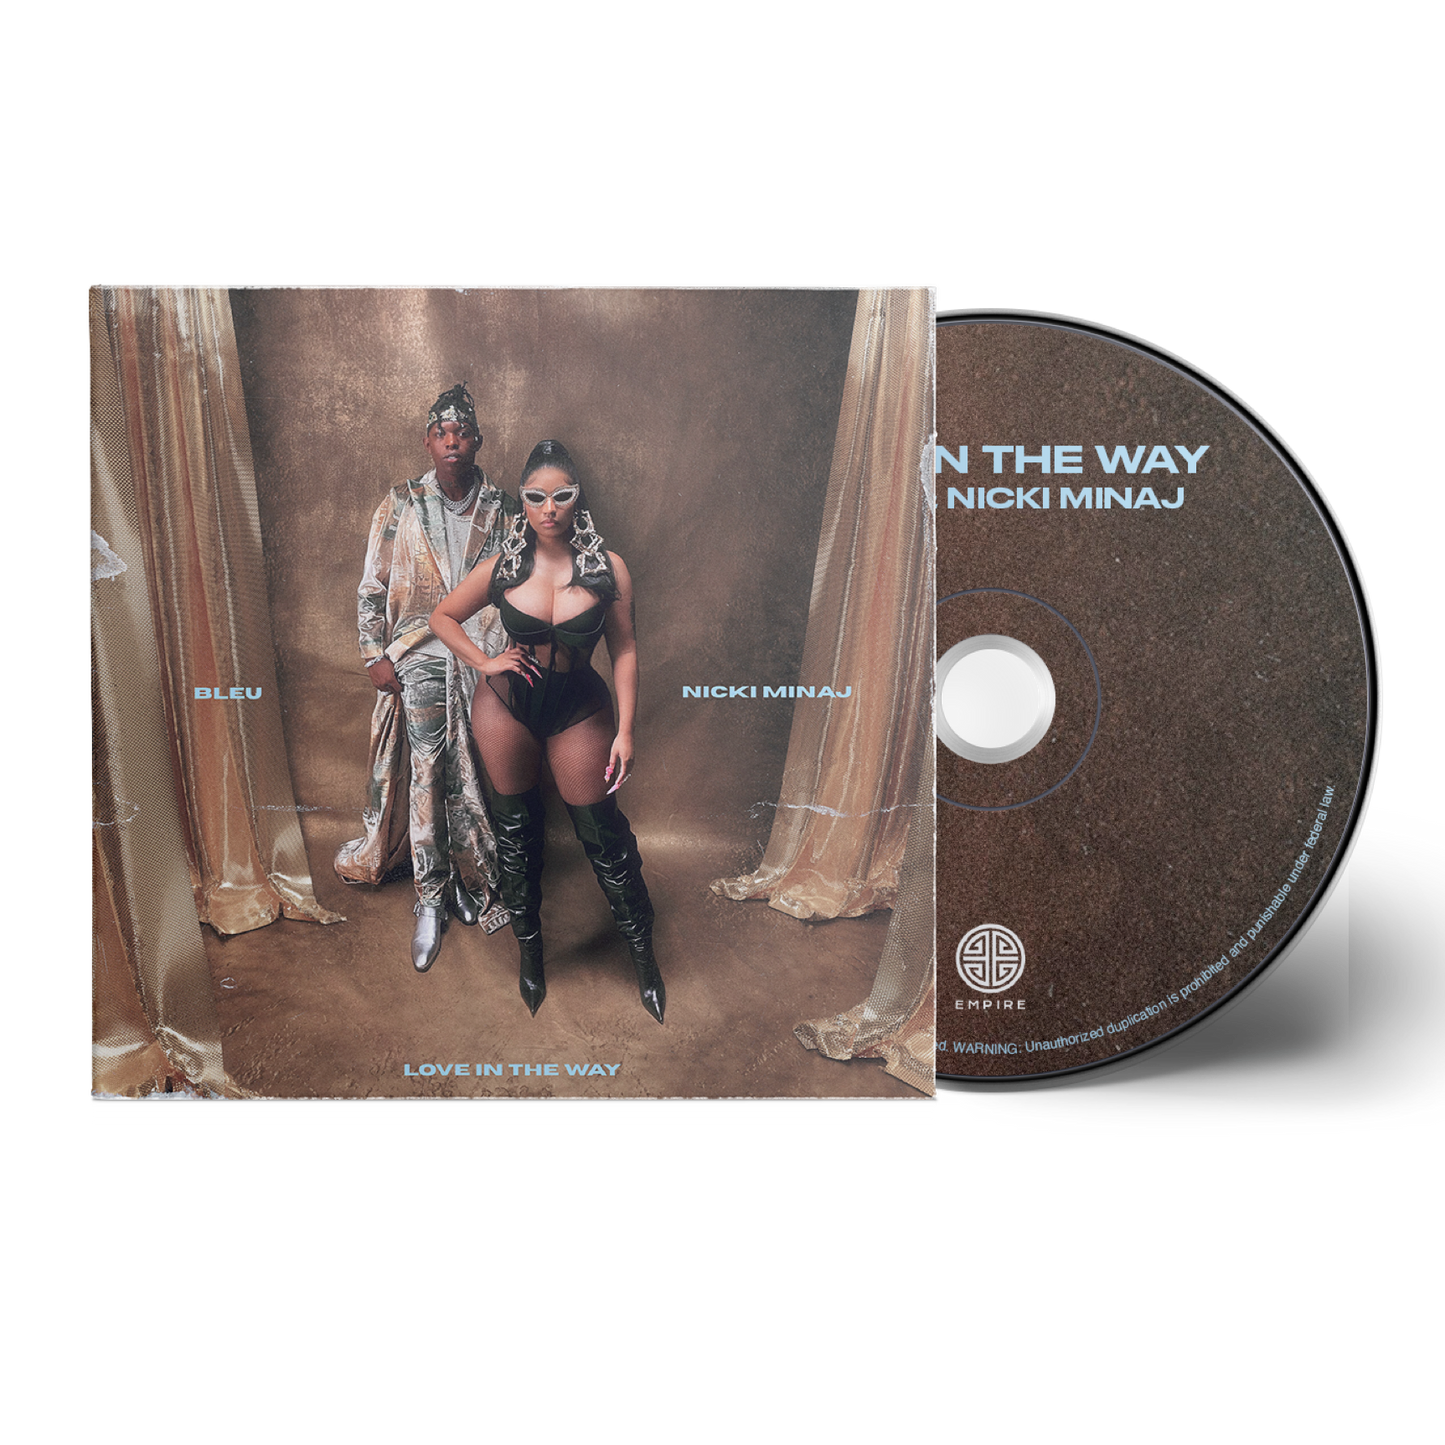 BLEU & Nicki Minaj - Love In The Way (CD Single)